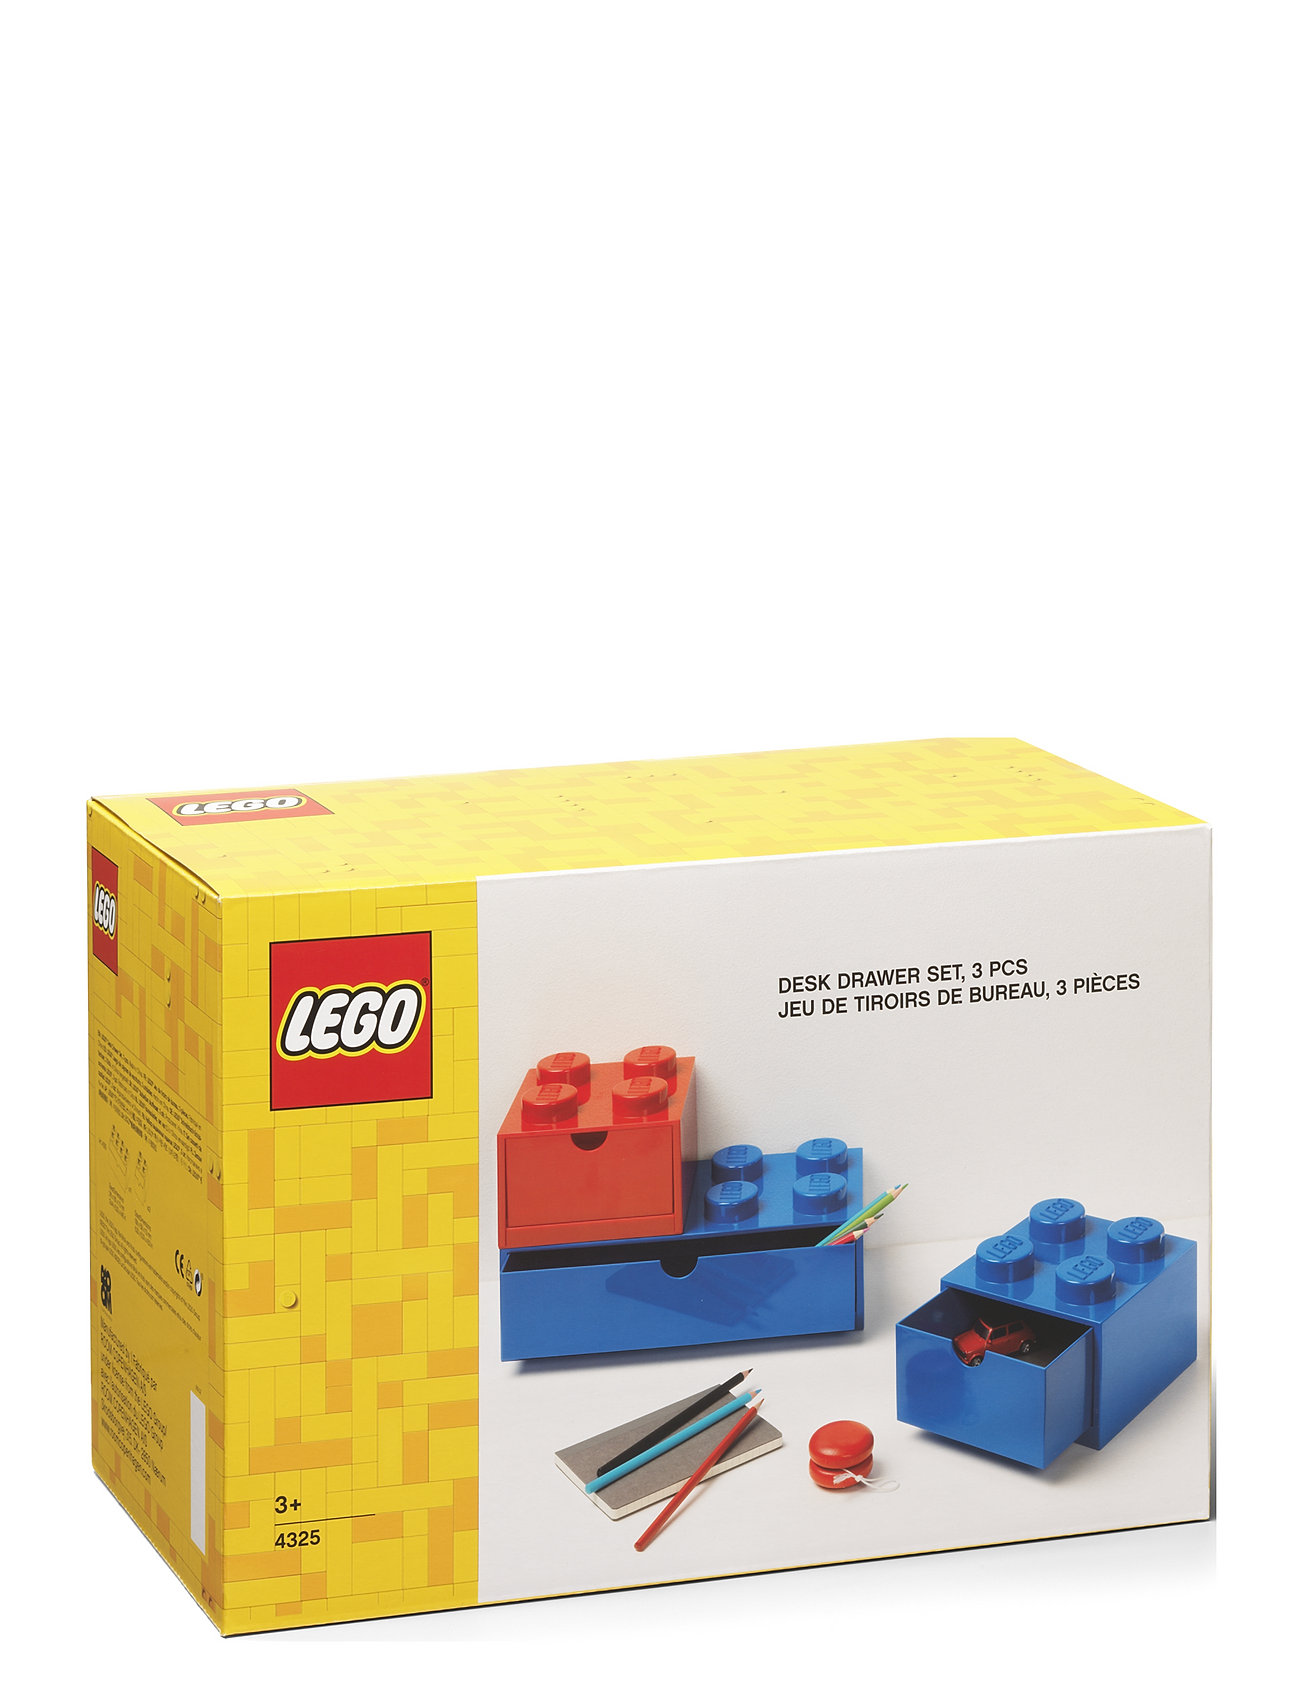 Lego Desk Drawer Set - Blue & Red Home Kids Decor Storage Storage Boxes Multi/patterned LEGO STORAGE